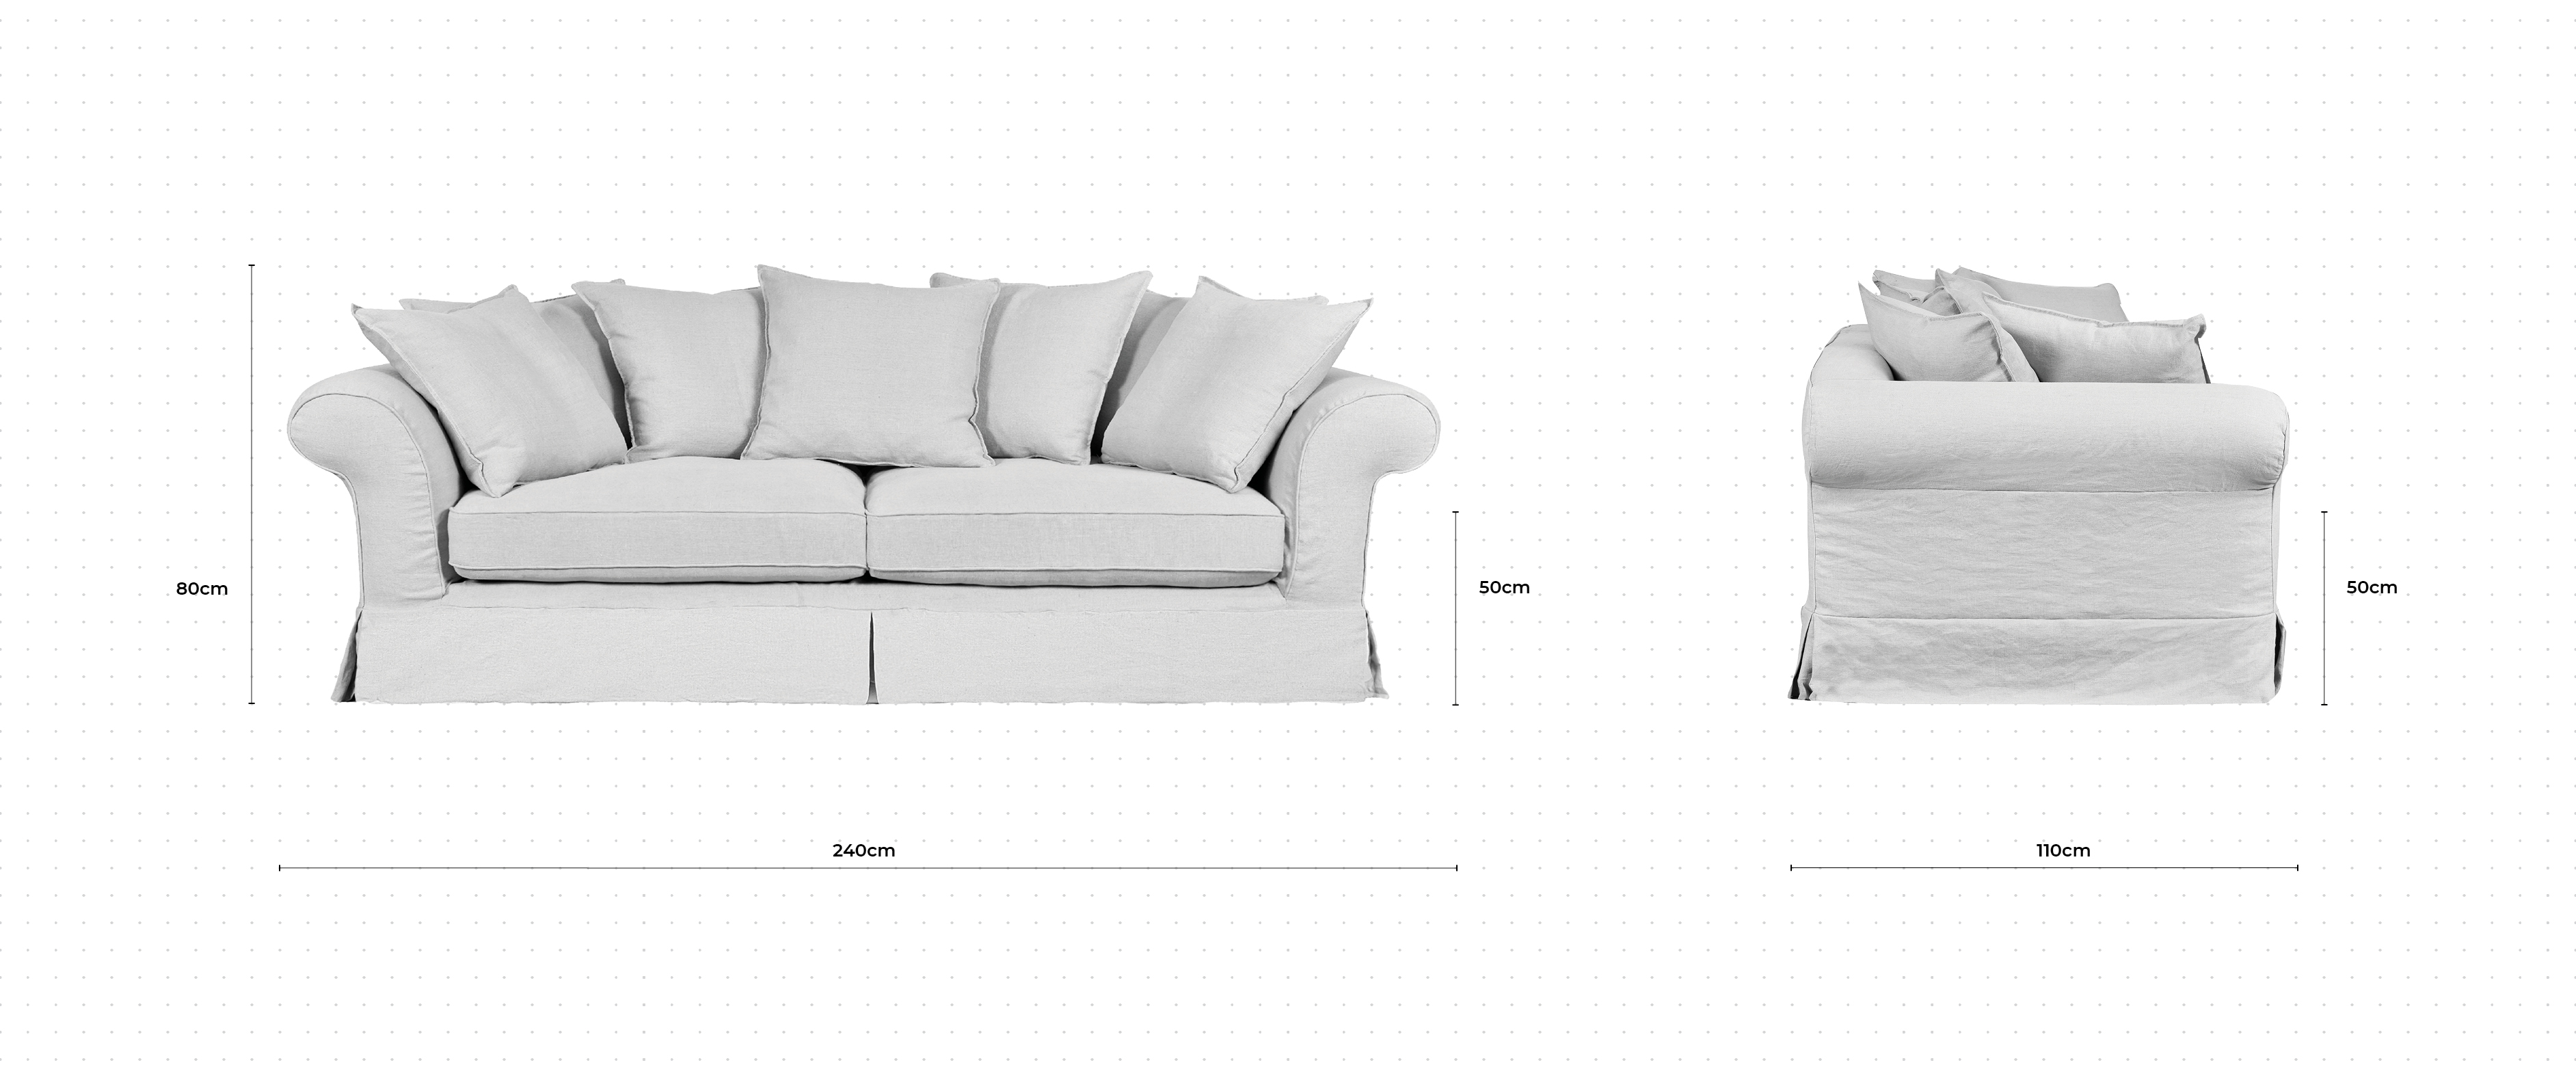 Dune 3 Seater Sofa dimensions